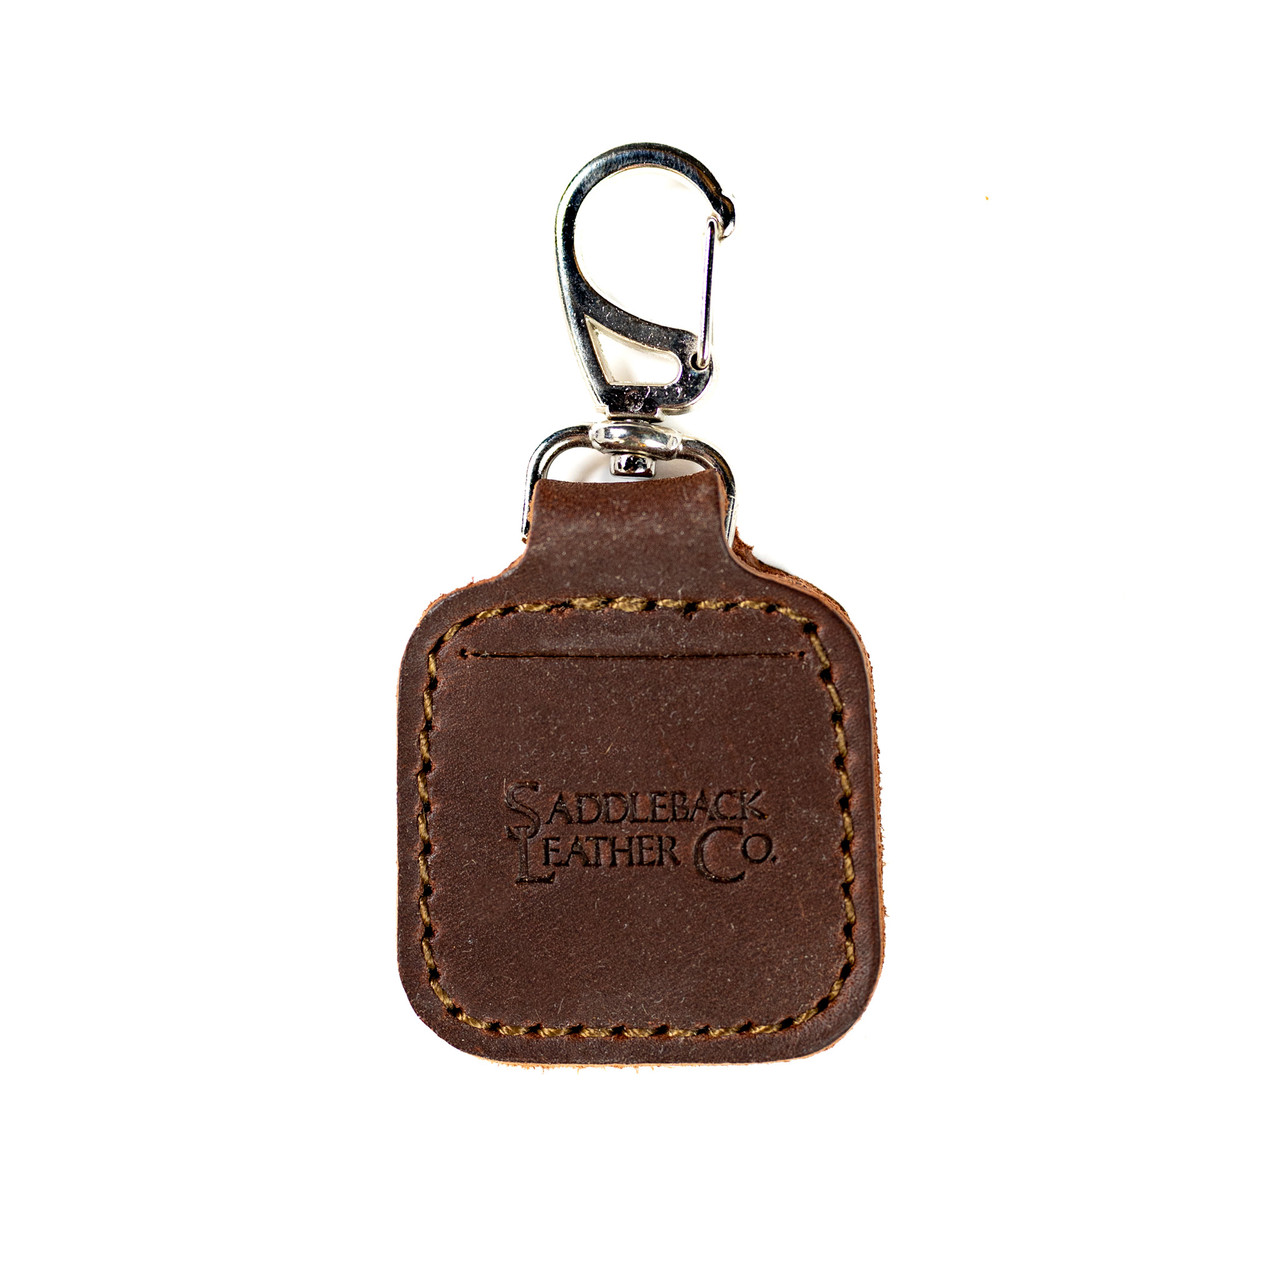 Saddleback Leather AirTag Keychain Case - The Rivet